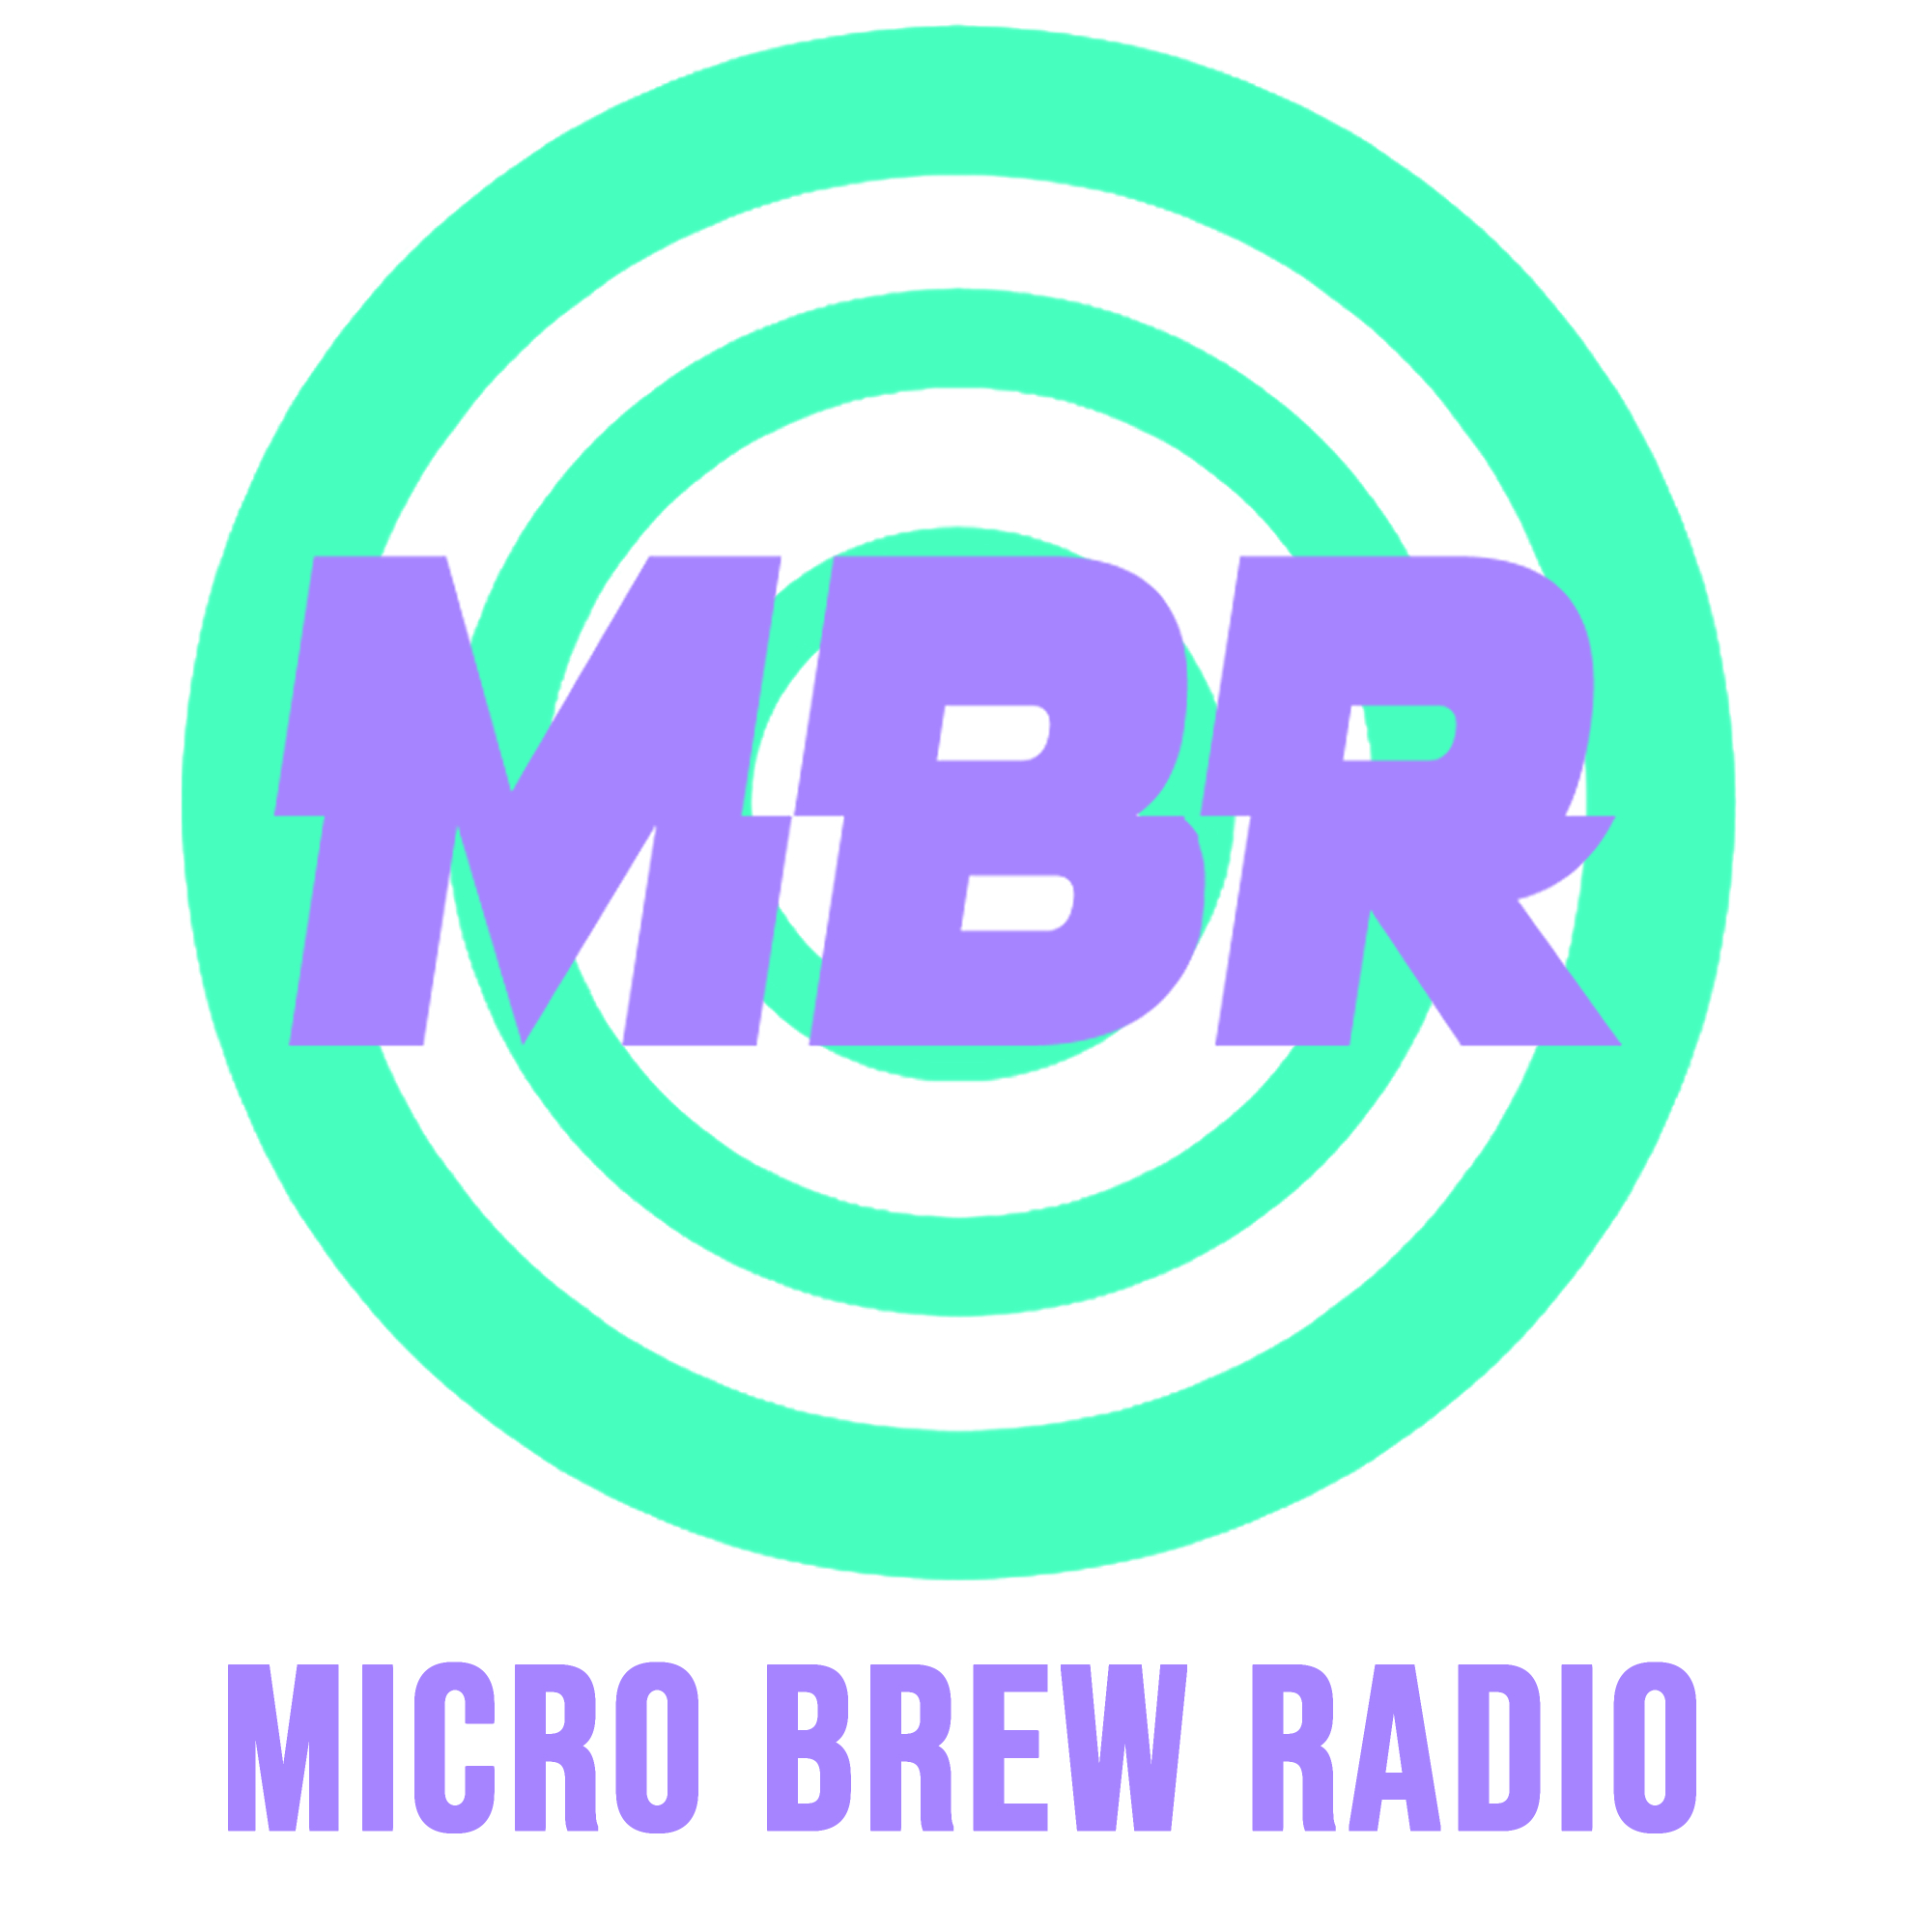 Microbrew radio logo